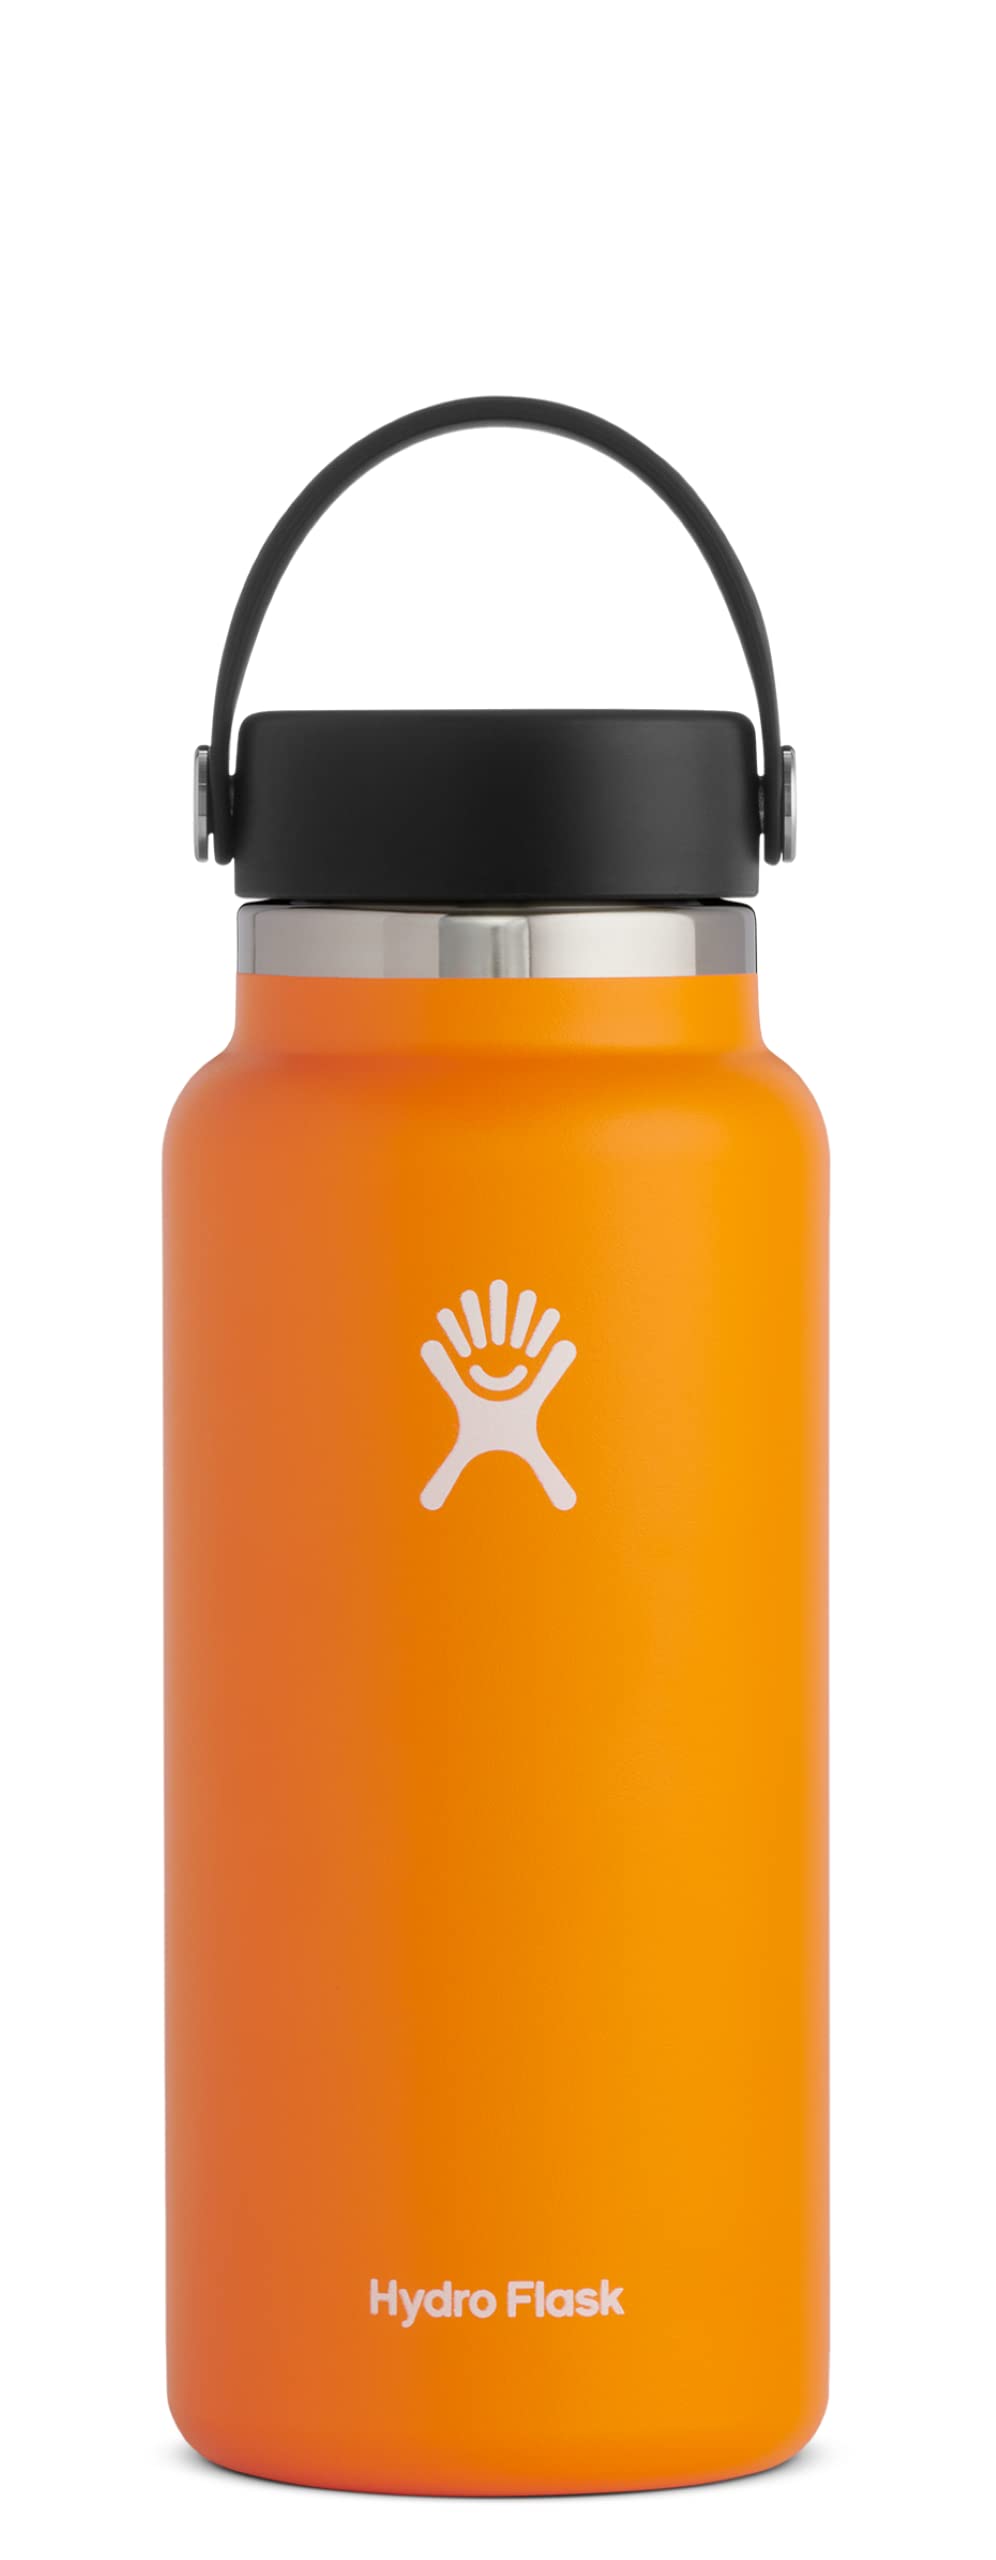 Hydro Flask Бутылка с широким горлышком и гибкой крышкой